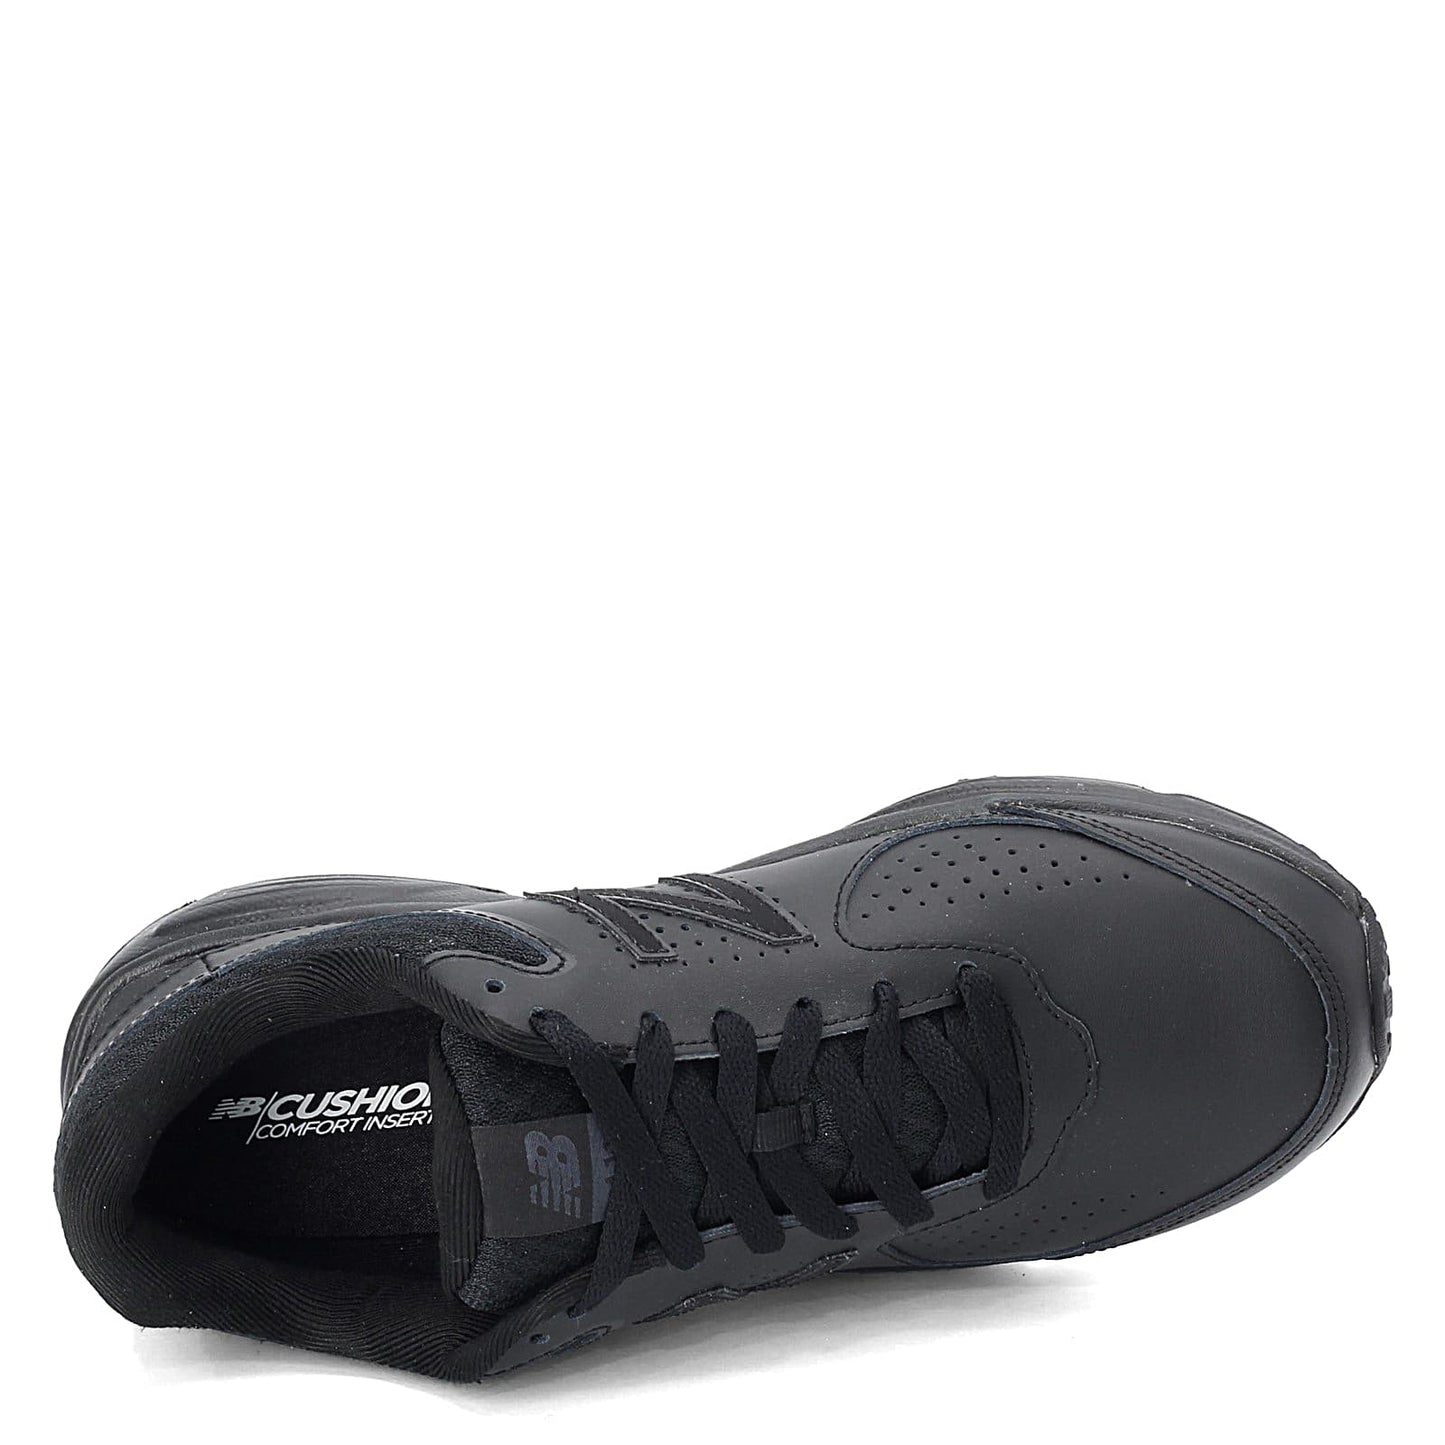 Peltz Shoes  Men's New Balance 411v2 Walking Shoe